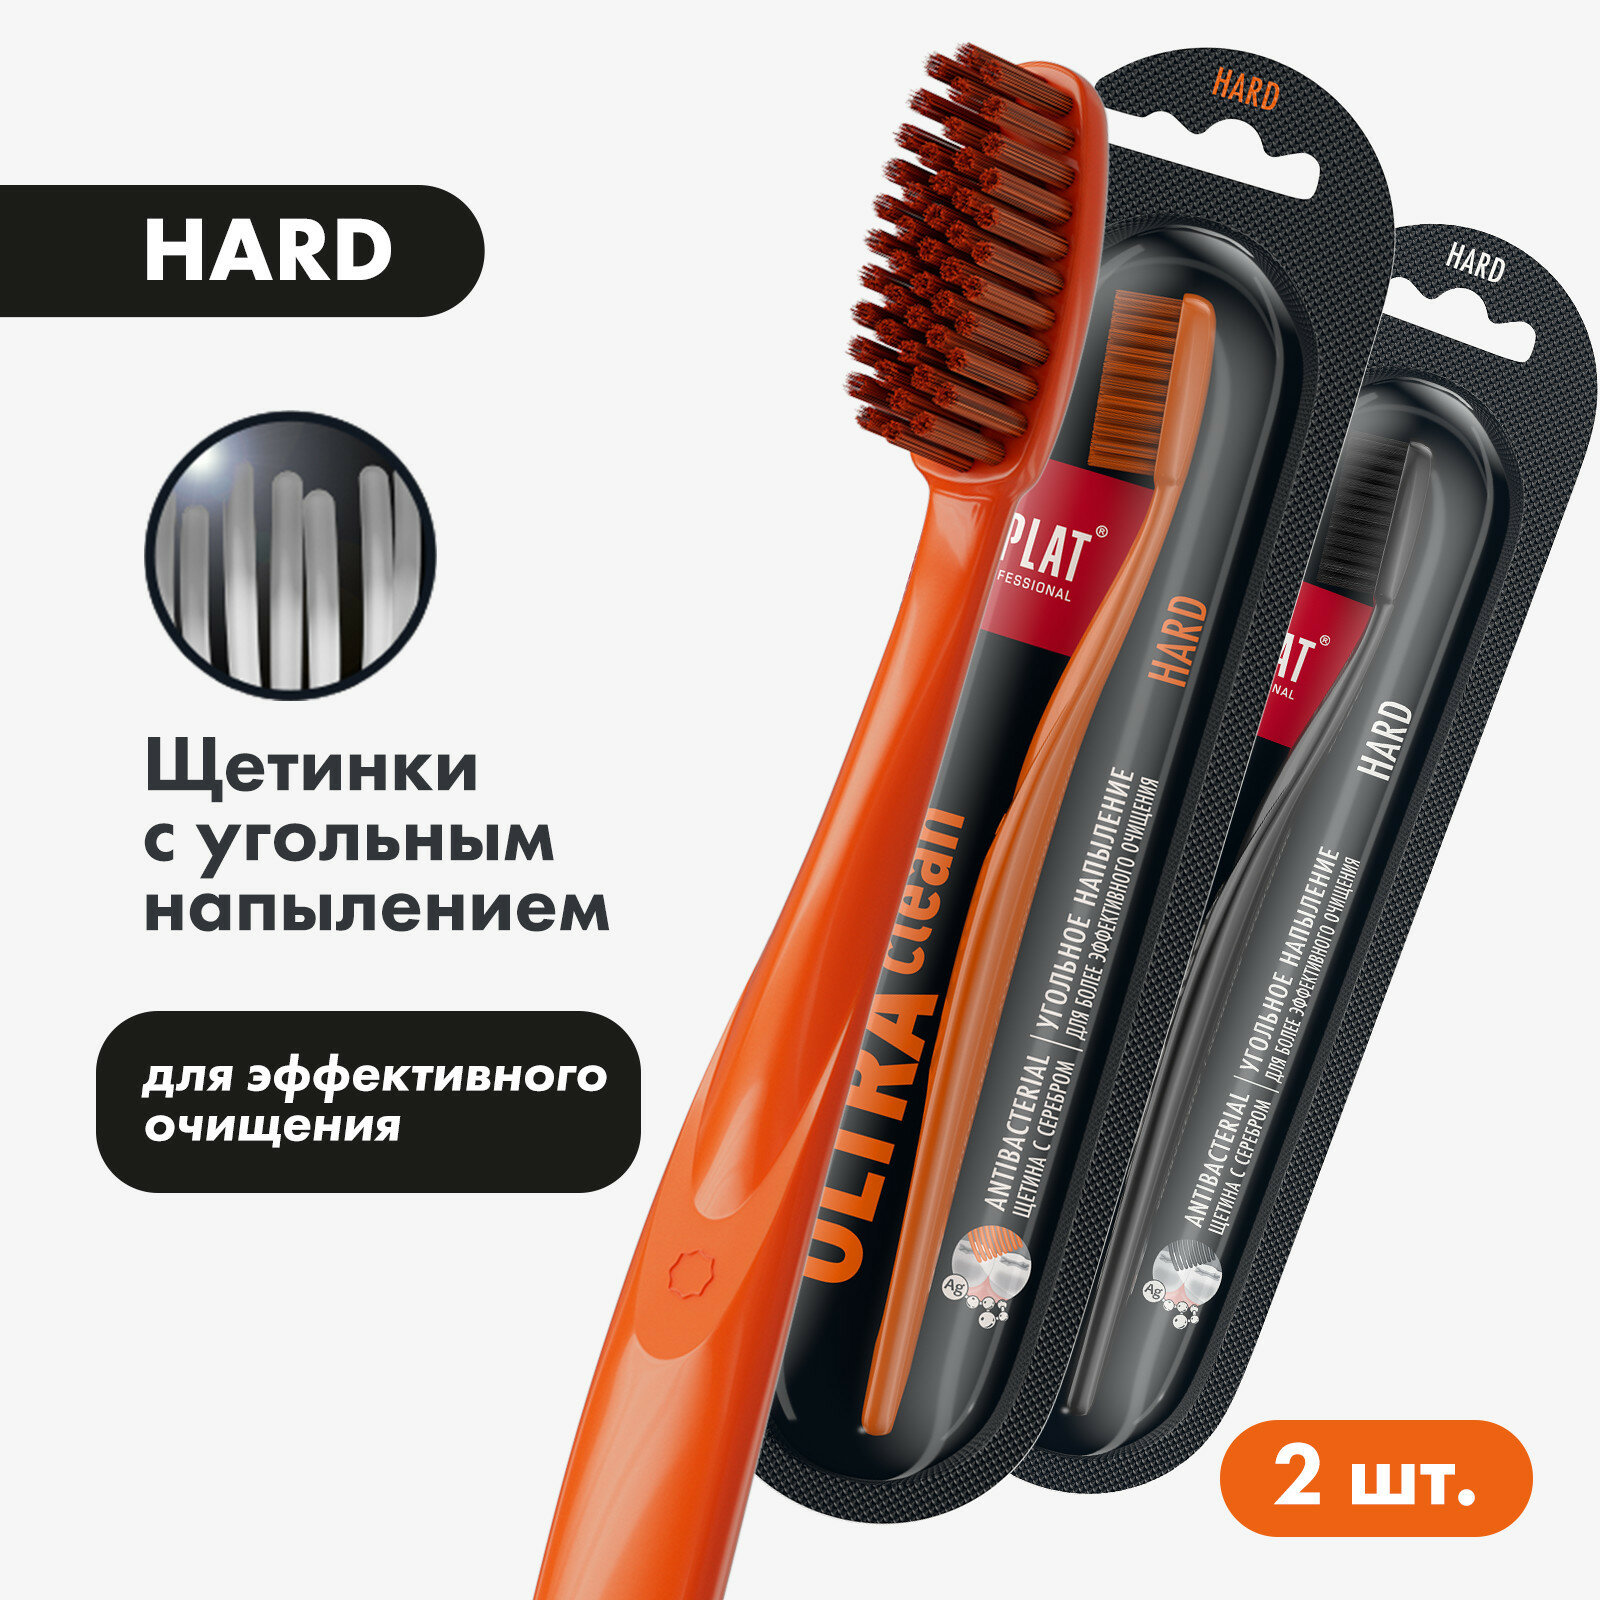 Prof ULTRA CLEAN Hard зубная щетка (Черная/ Оранжевая) (x2)